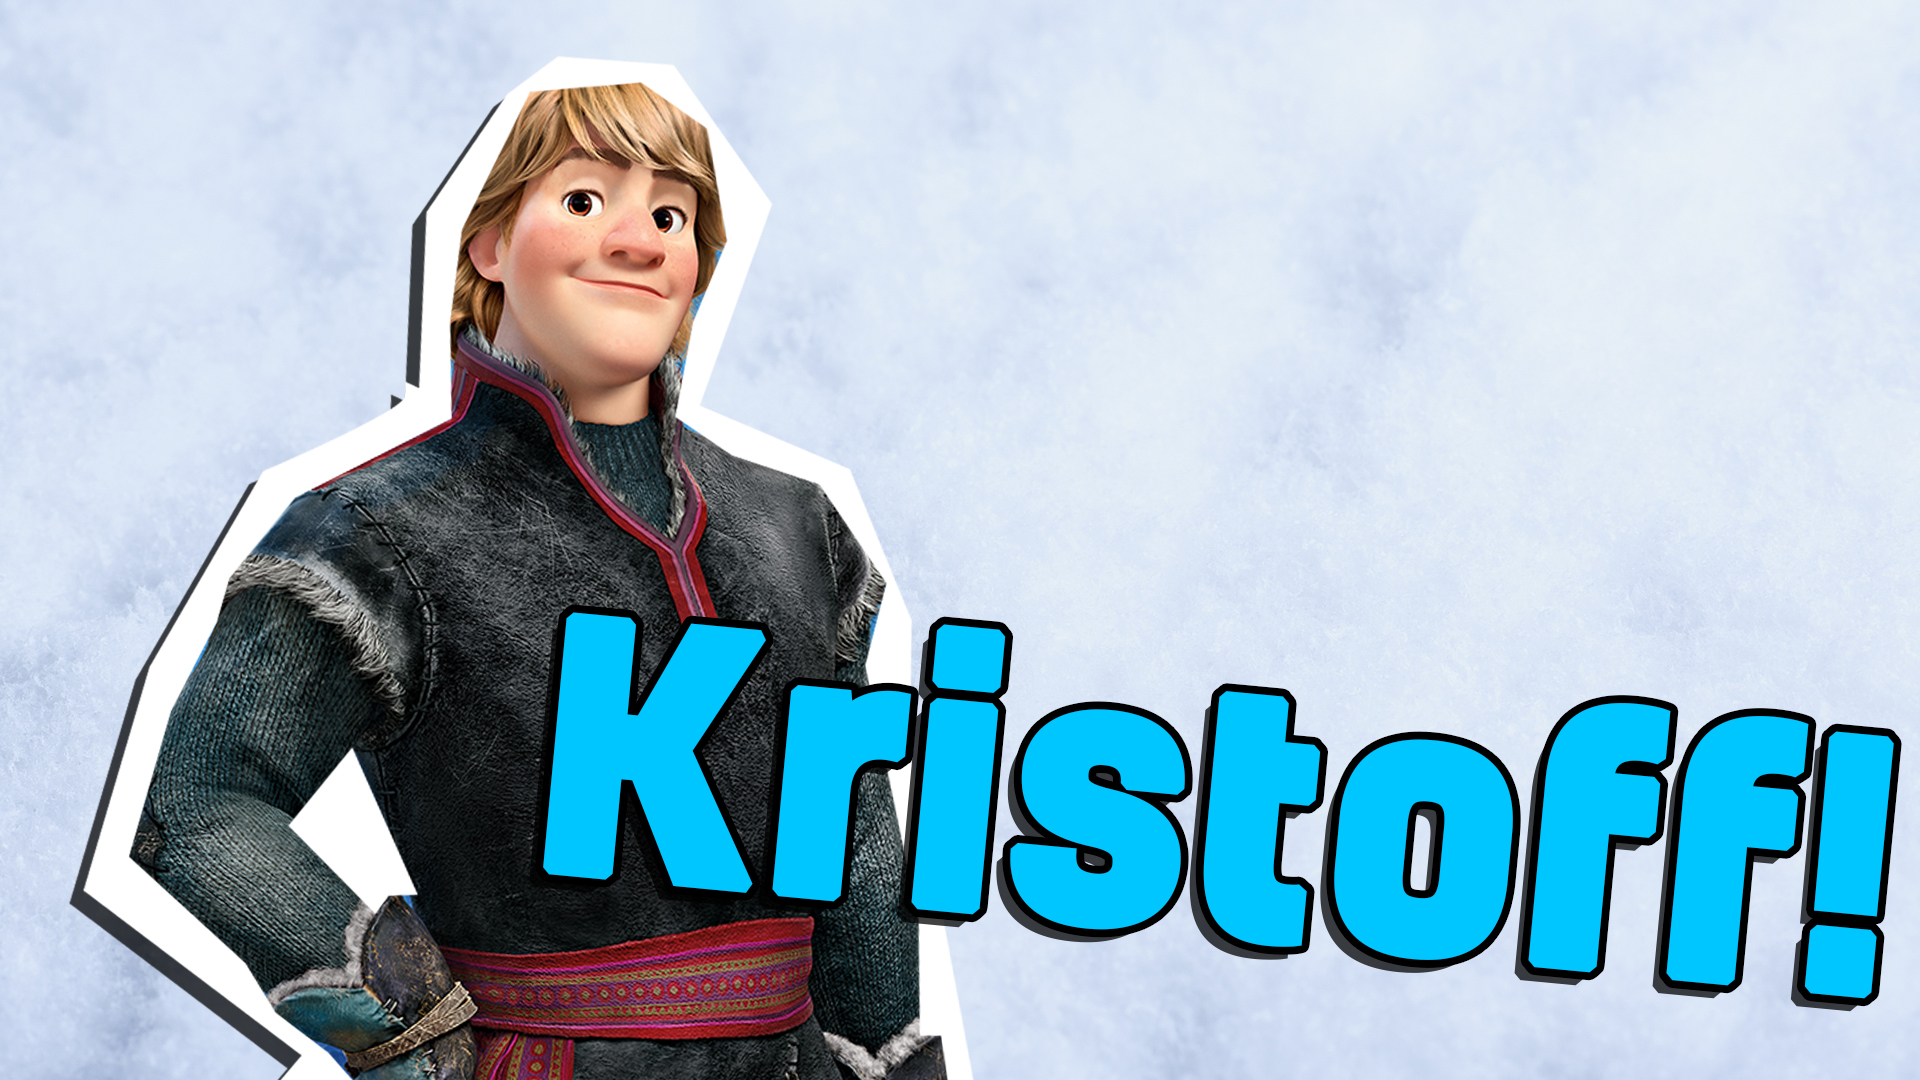 Kristoff from Frozen